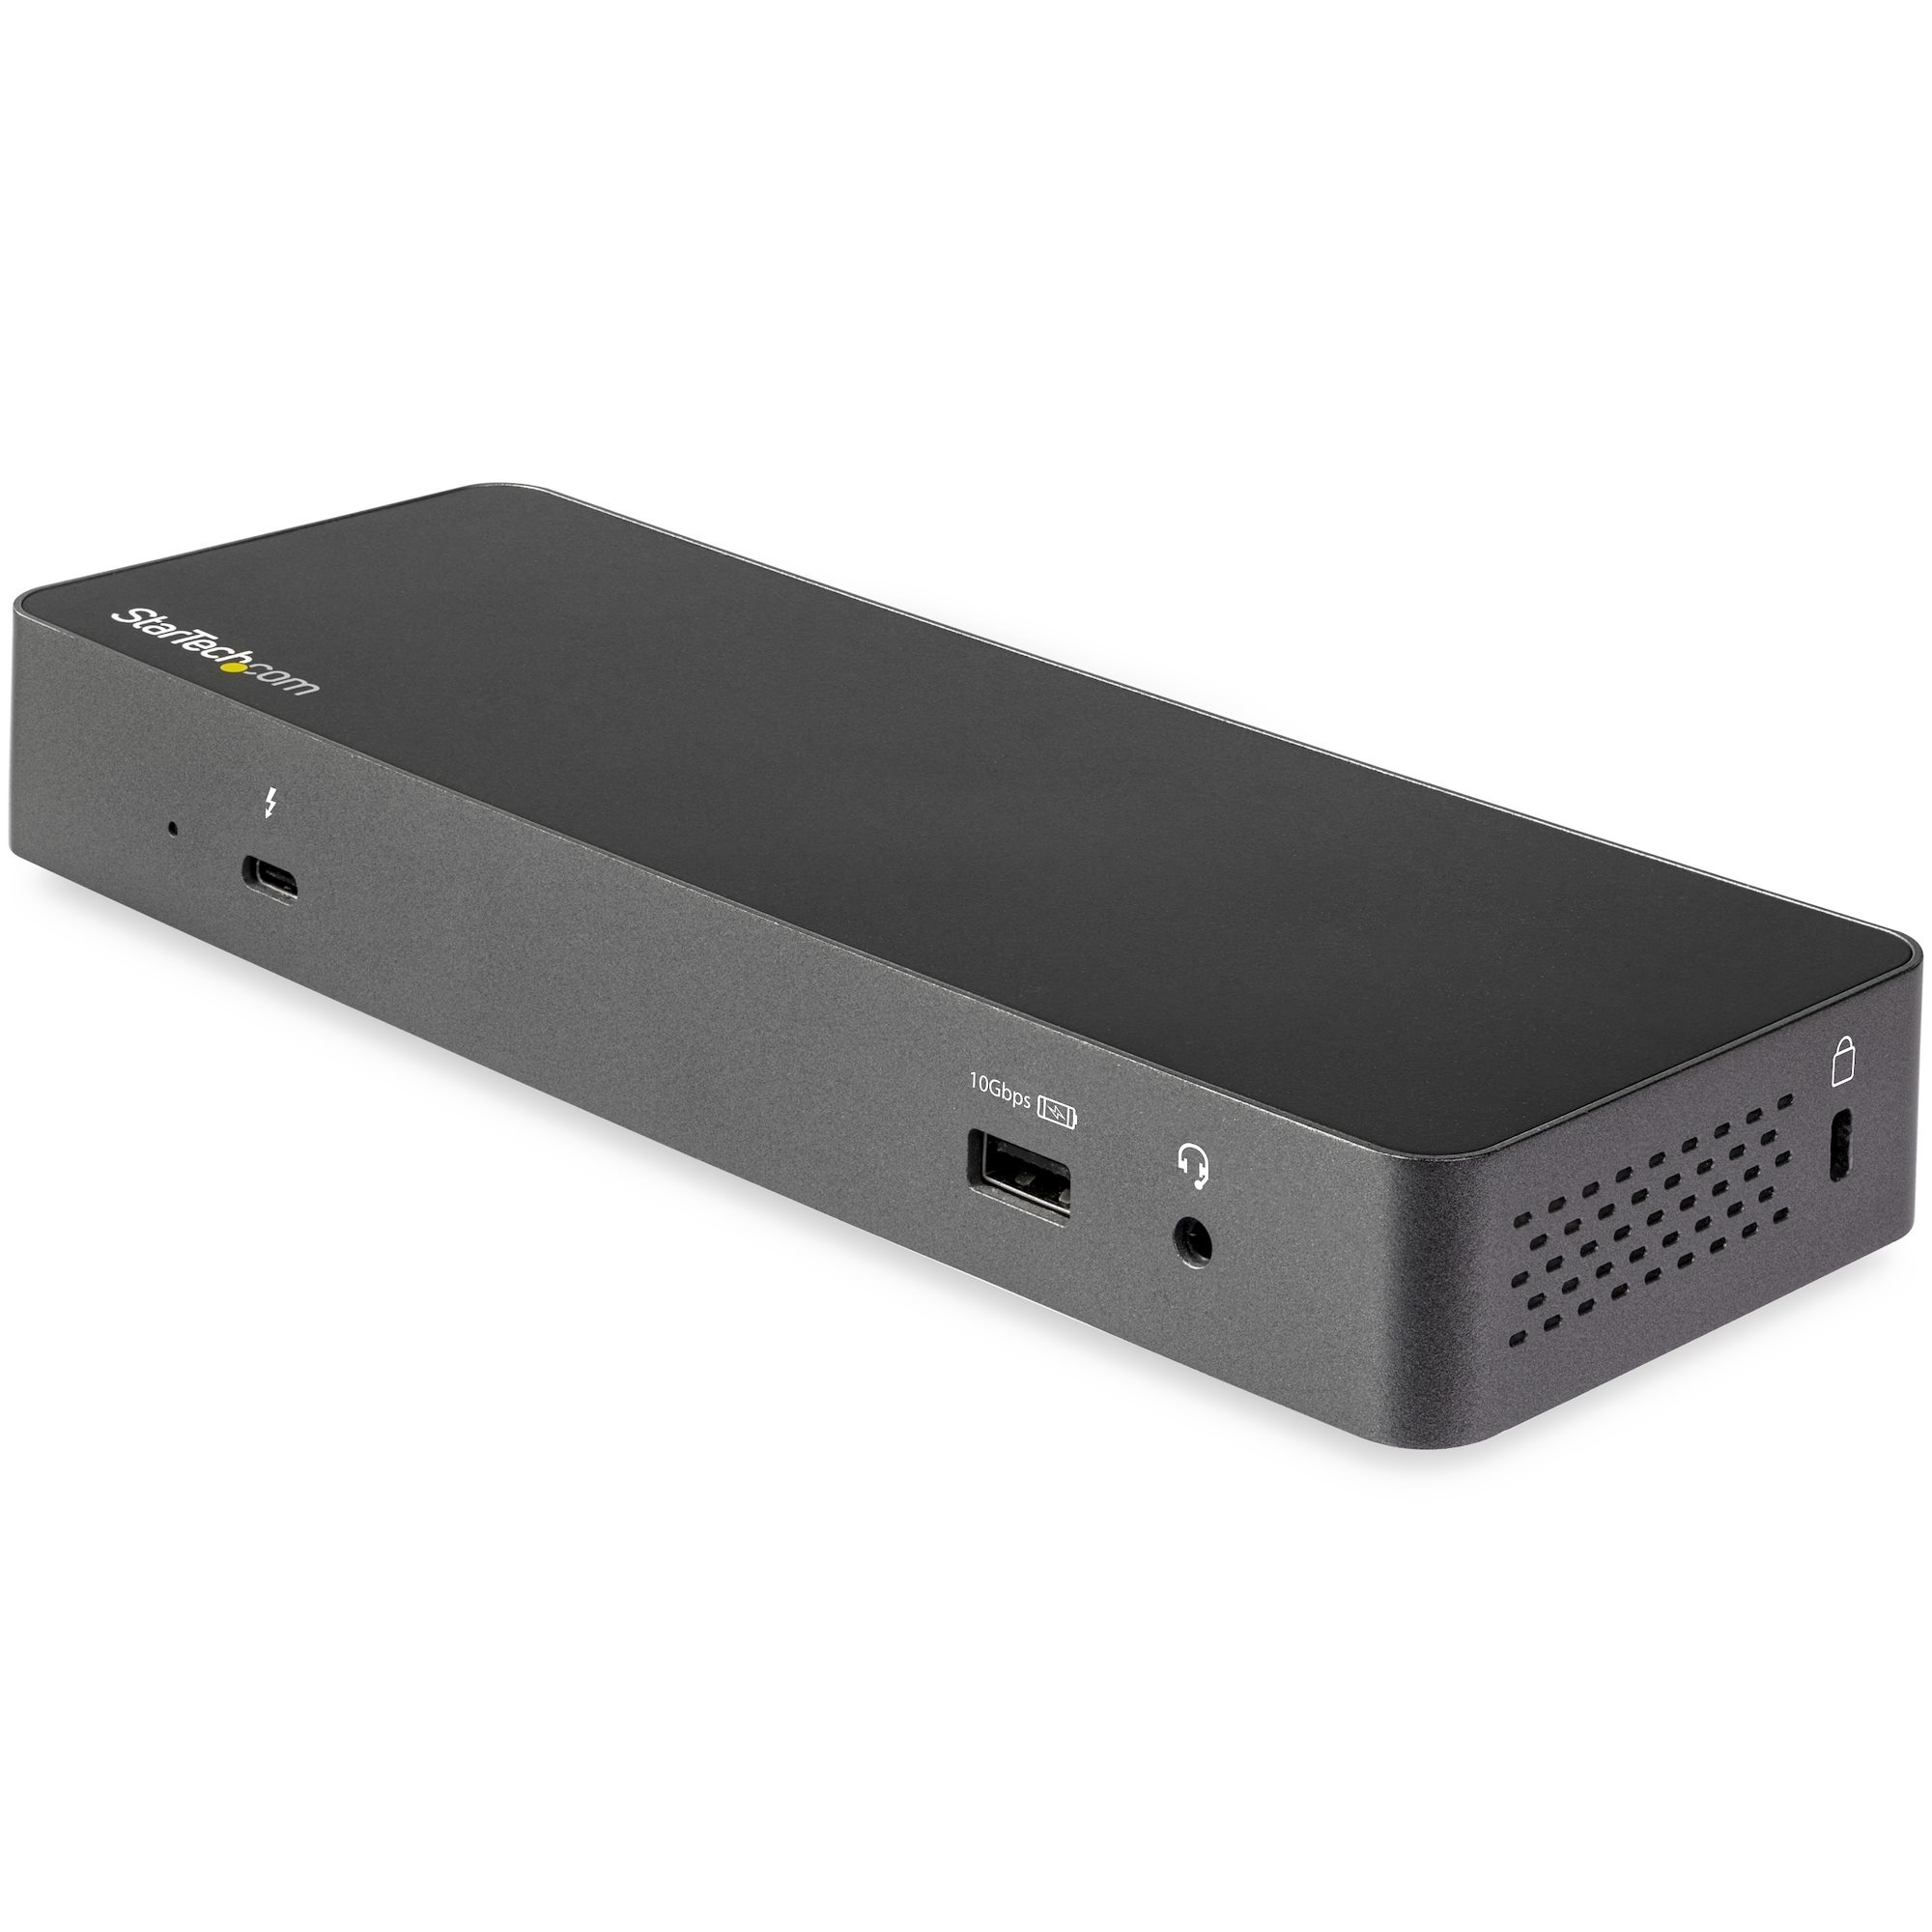 Startech Thunderbolt 3 Dock w/ USB-C Compatibility